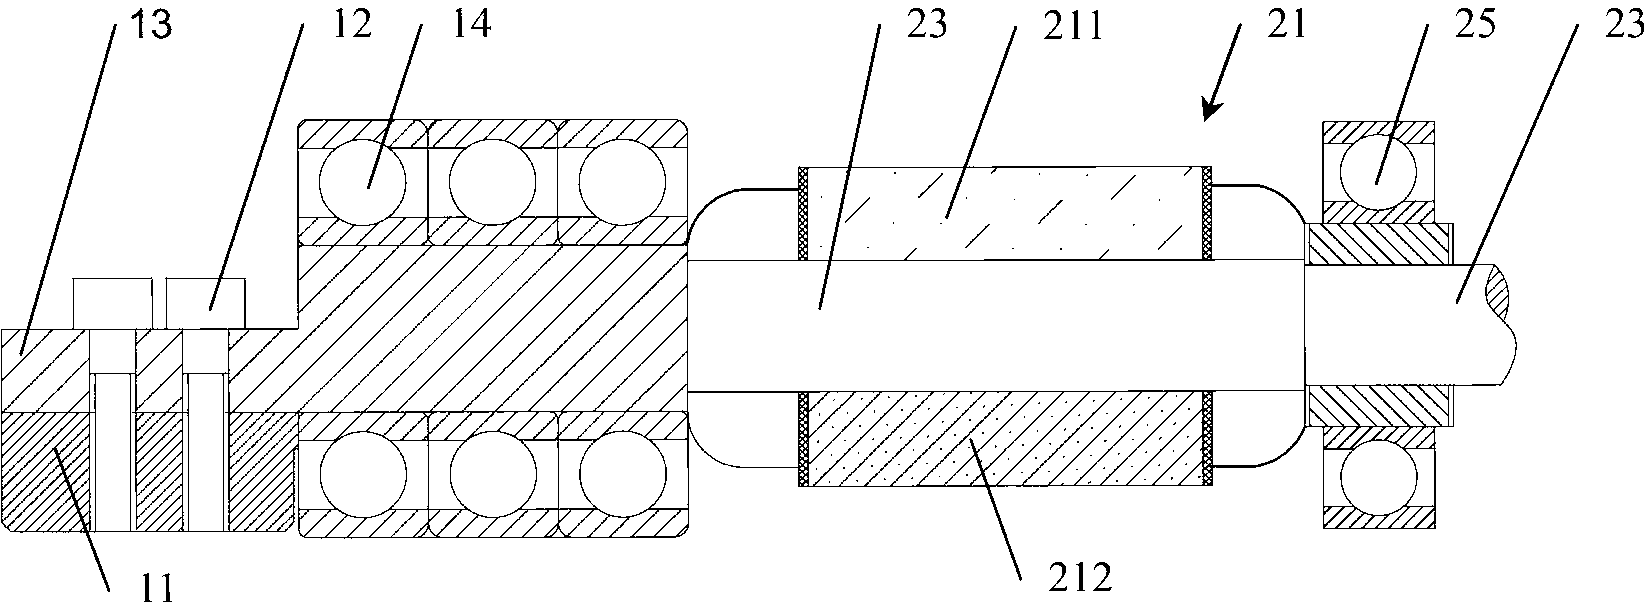 Motor and concrete vibrating rod using same